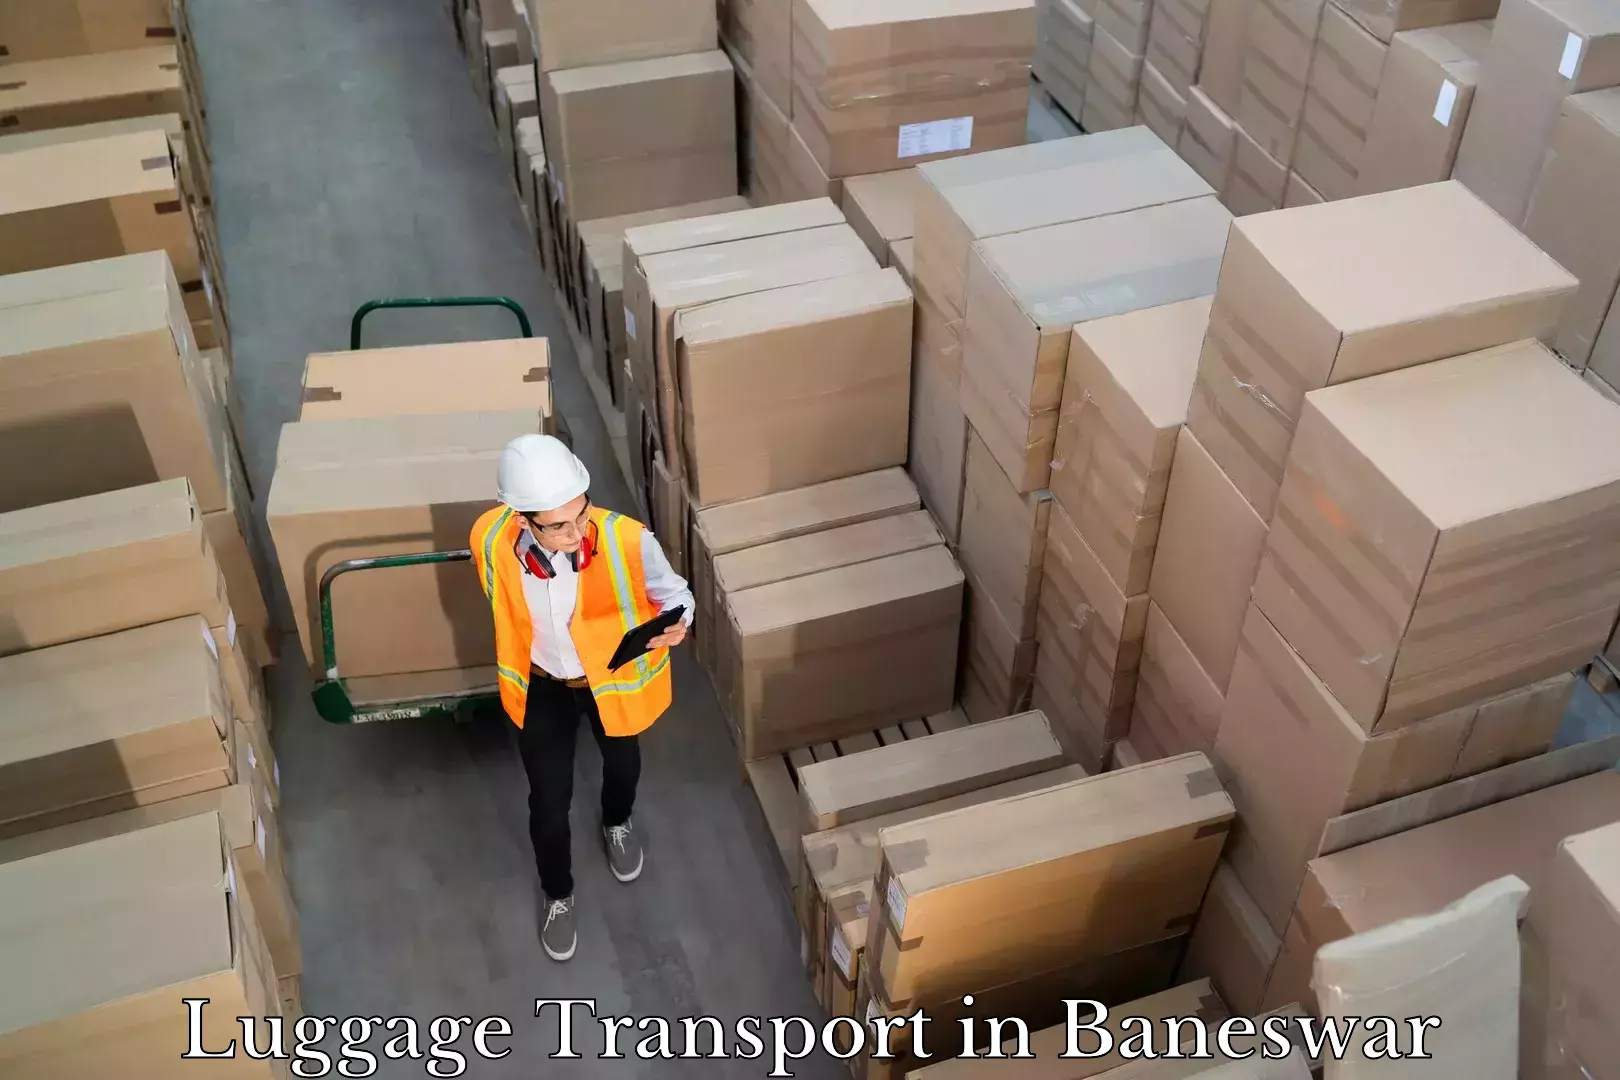 Multi-destination luggage transport in Baneswar